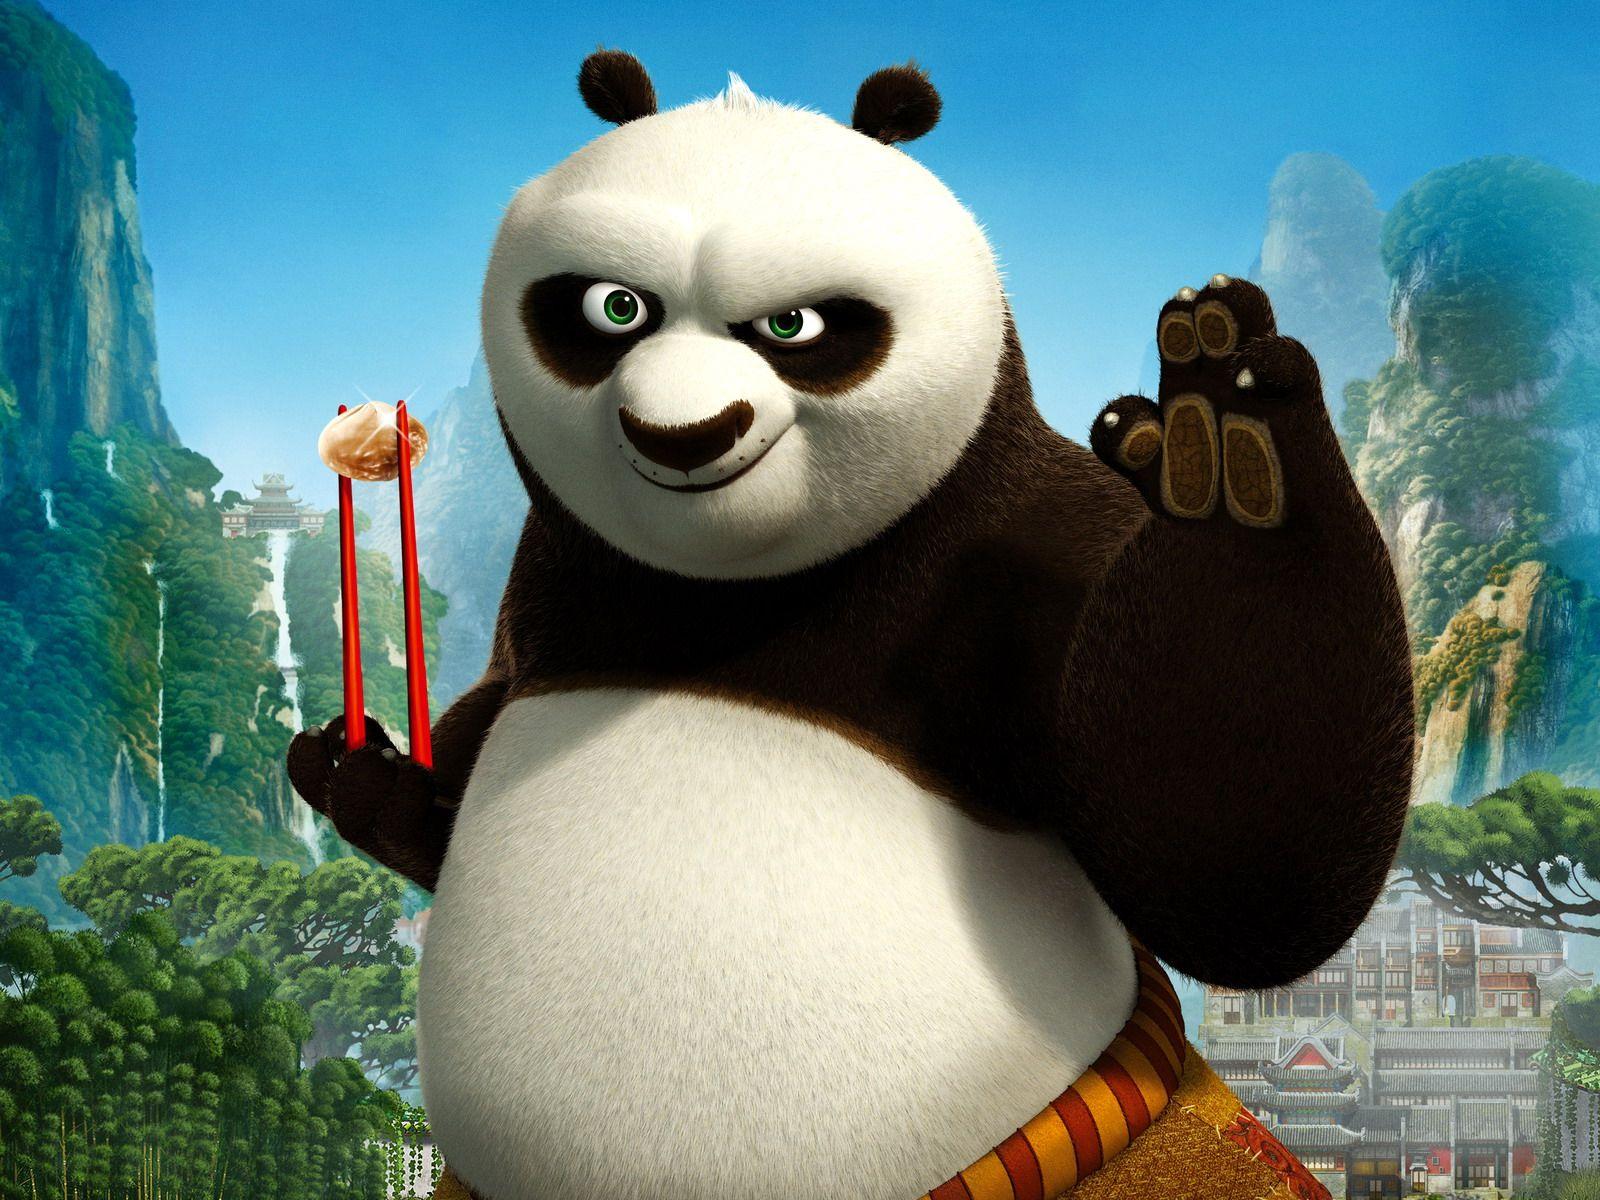 HD Kung Fu Panda Movie Wallpaper